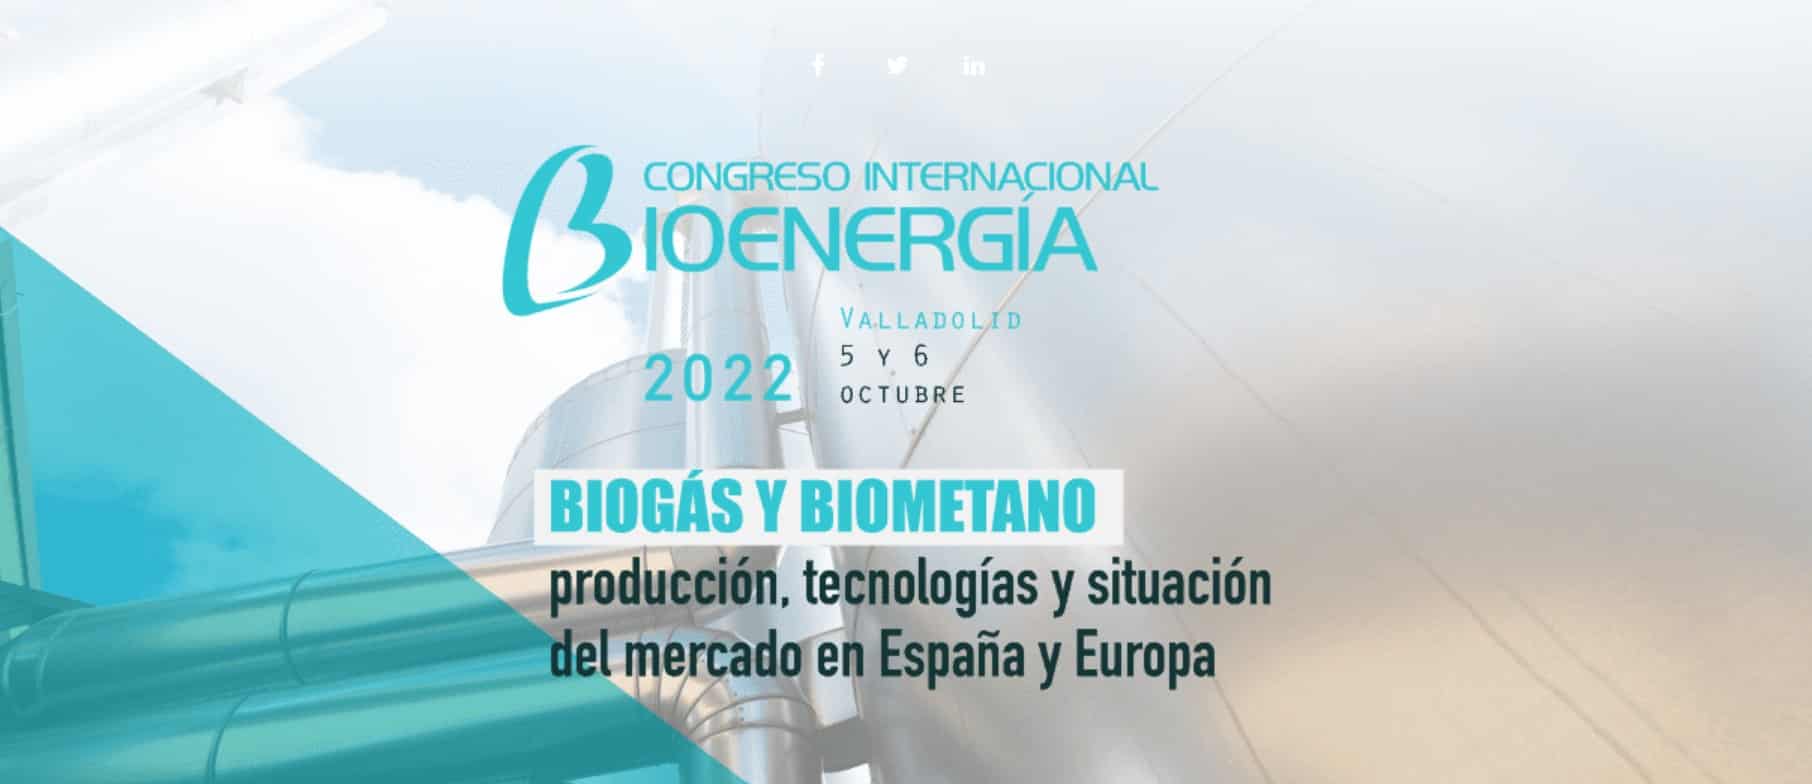 bioenergy conference